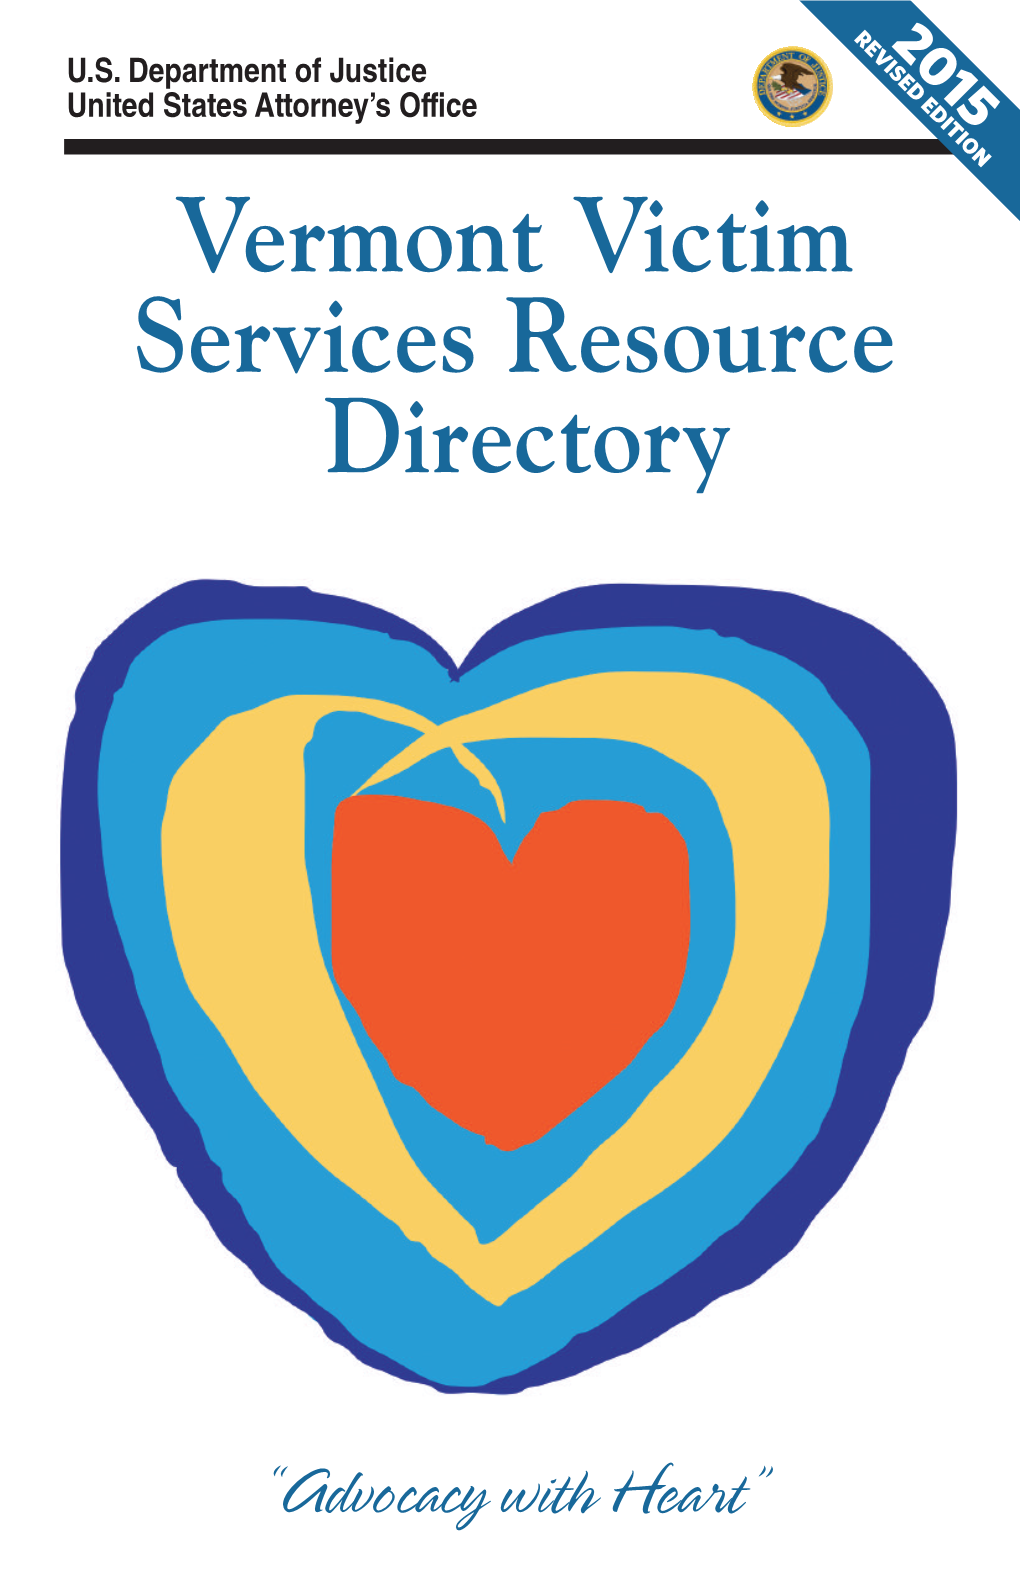 Vermont Victim Services Resource Directory